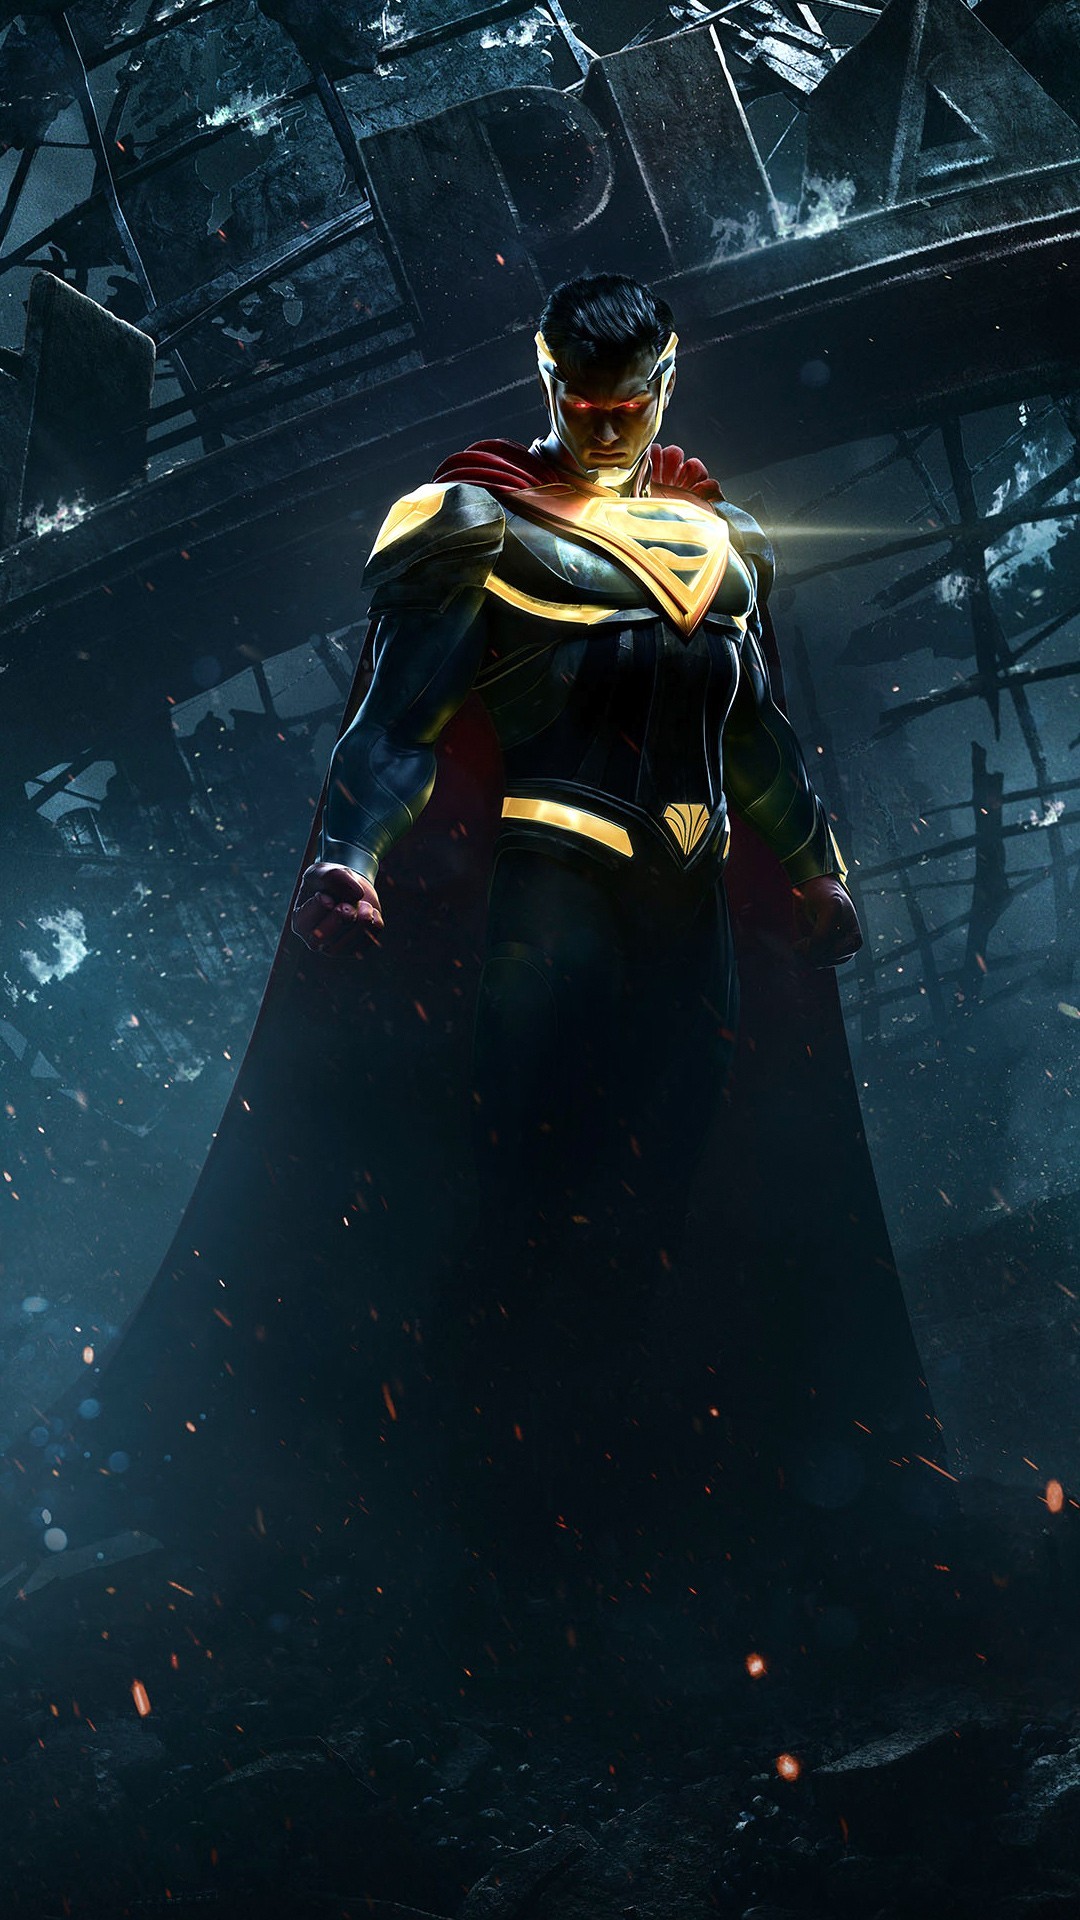 superman wallpaper hd for android,batman,superhero,fictional character,superman,justice league